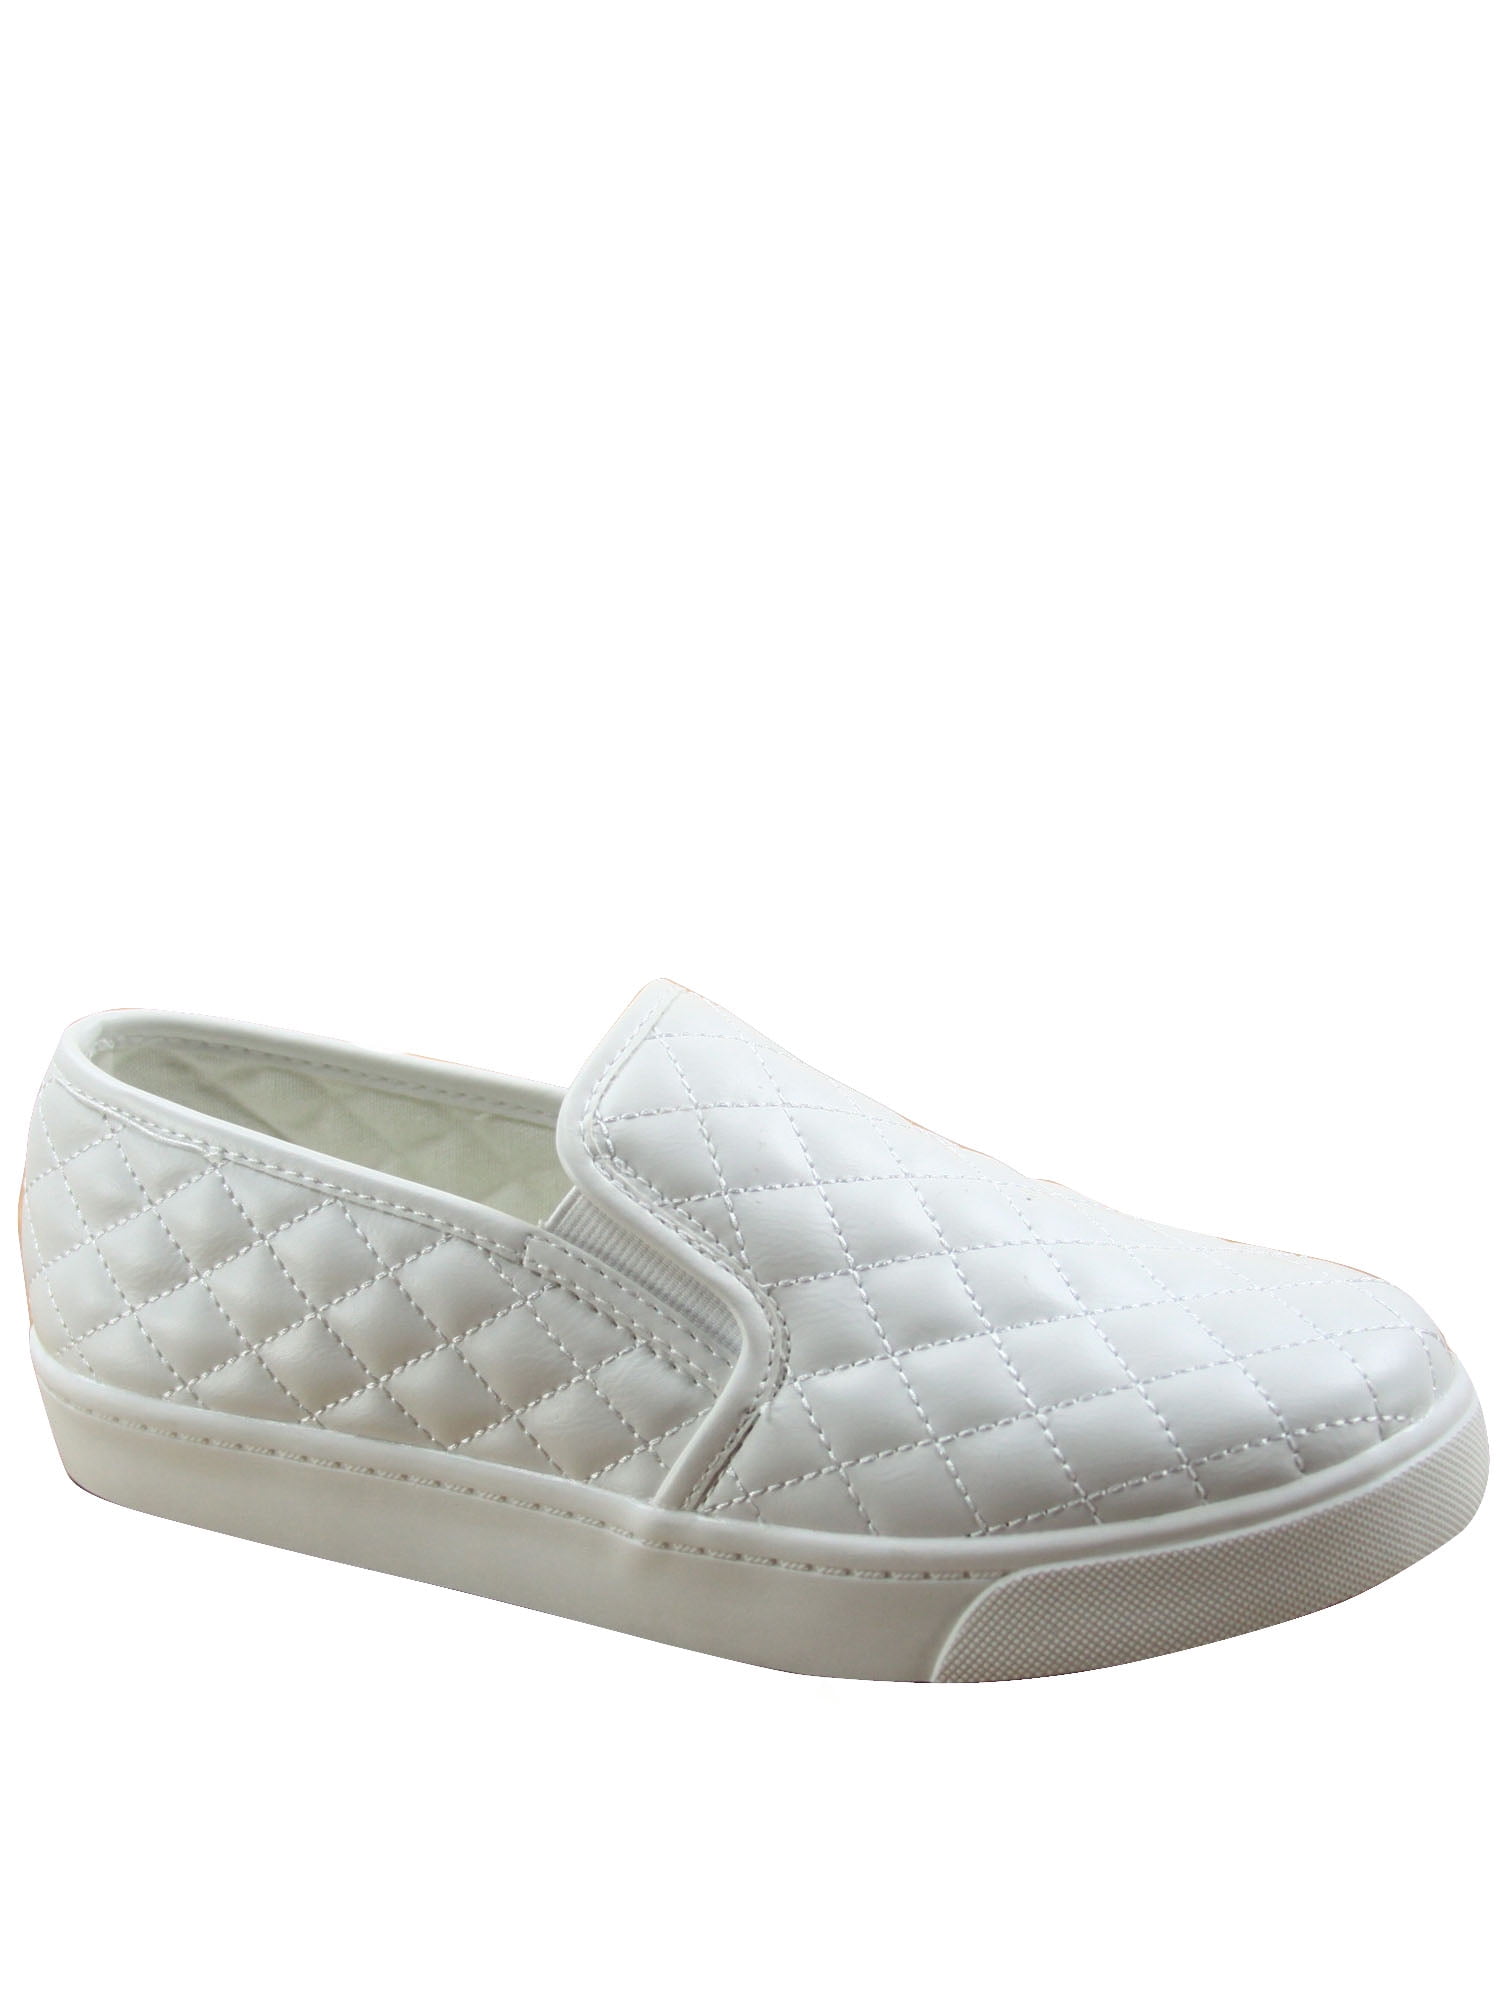 Alone Women's Flat Slip On Layer Foam Padded Cushion Sock Fashion Sneakers Shoes -